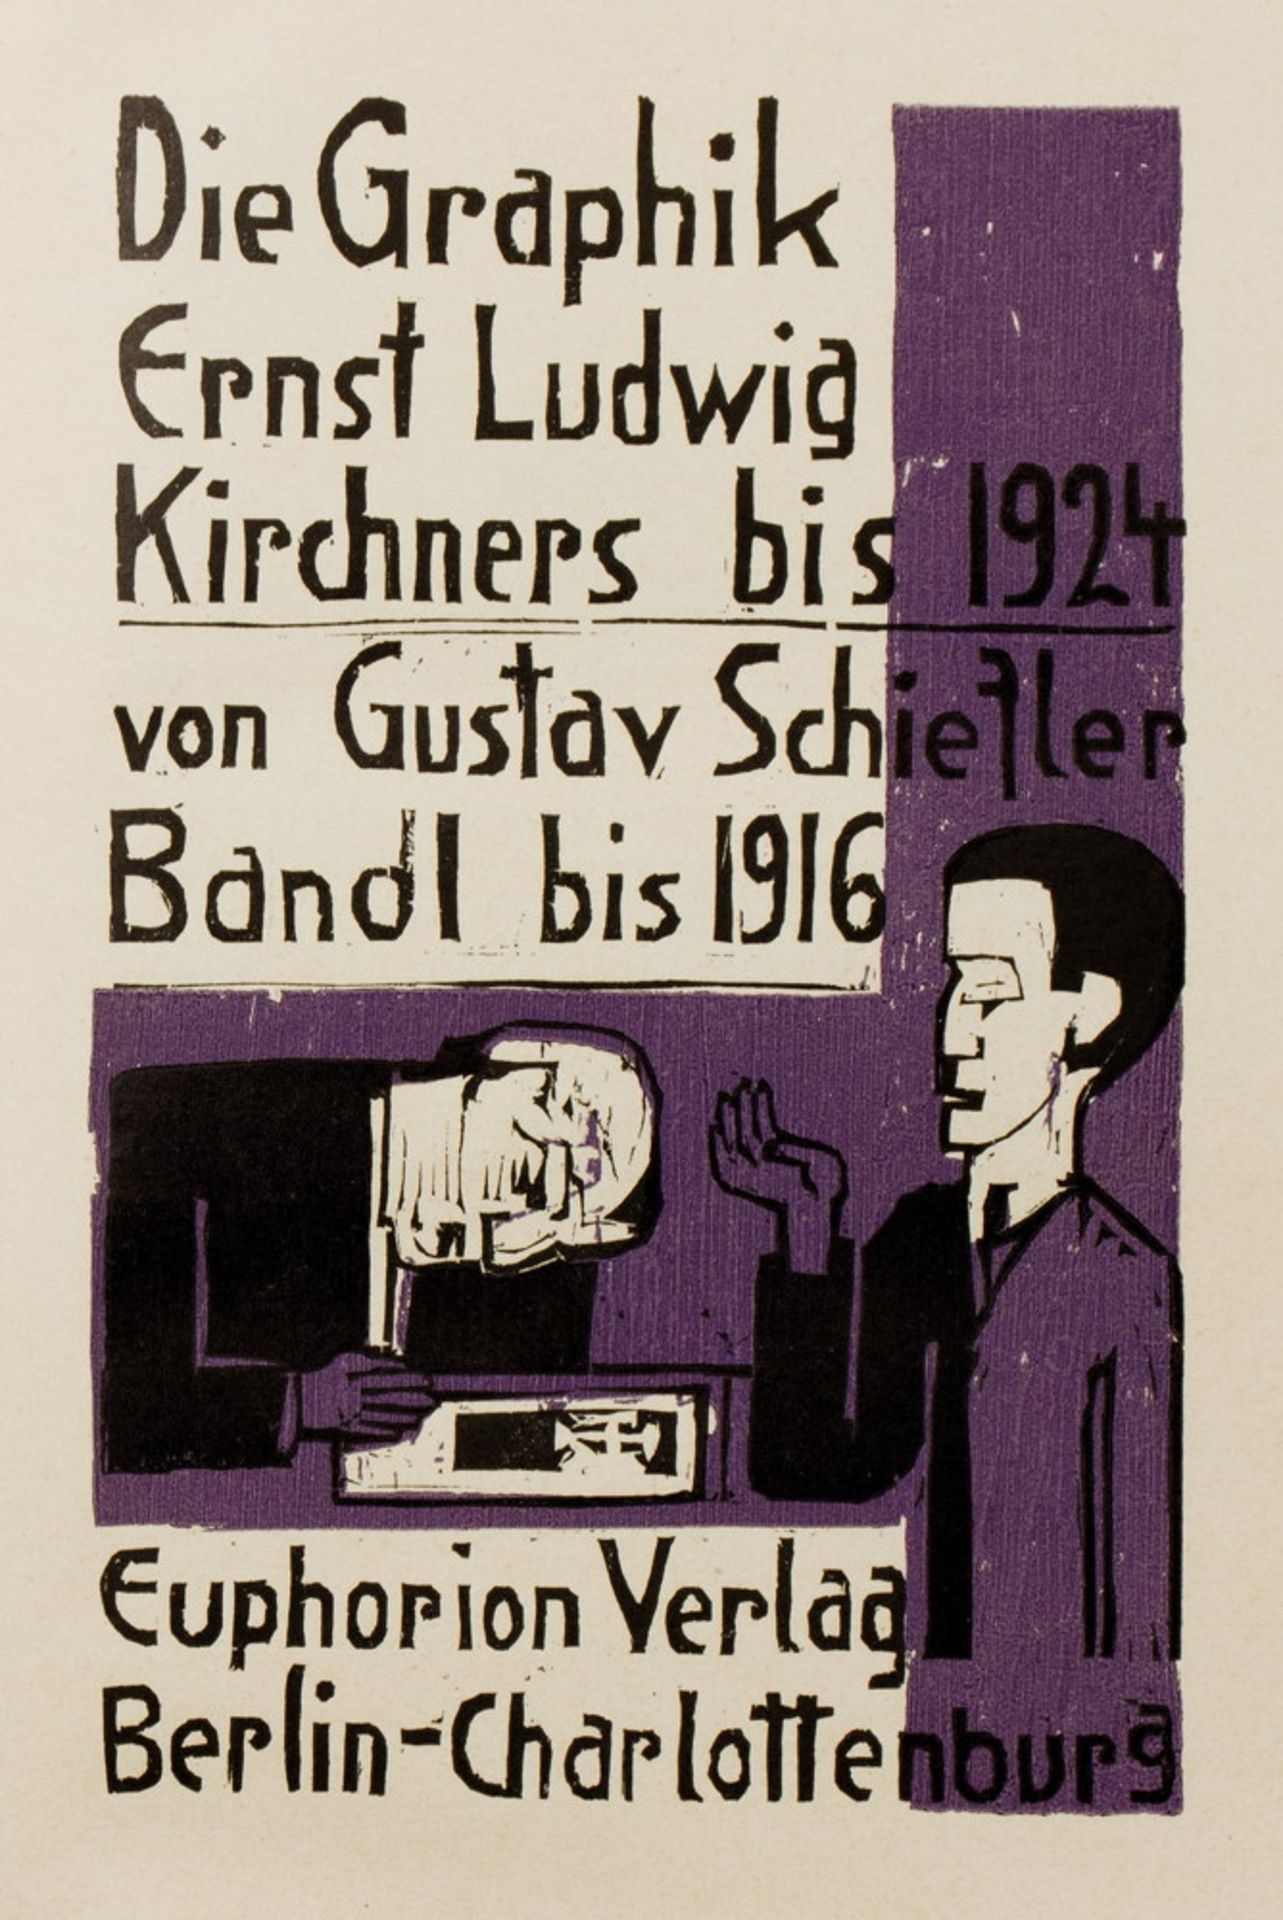 Ernst Ludwig Kirchner - Gustav Schiefler. Die Graphik Ernst Ludwig Kirchners bis 1924. - Image 2 of 8